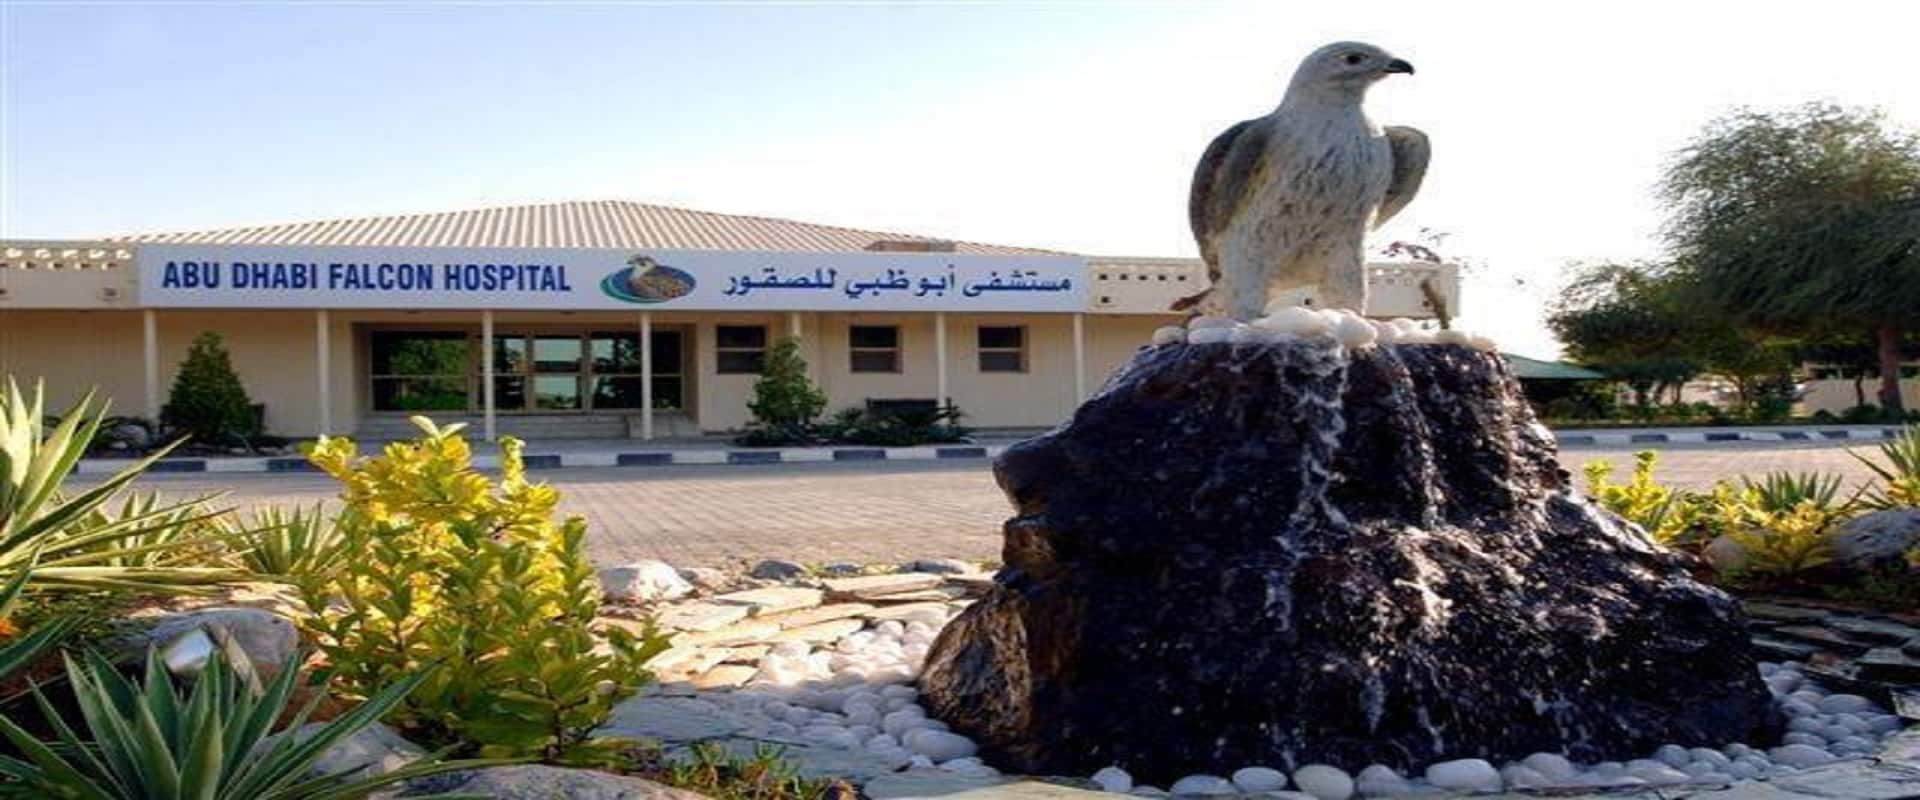 Abu Dhabi Falcon Hospital Tour